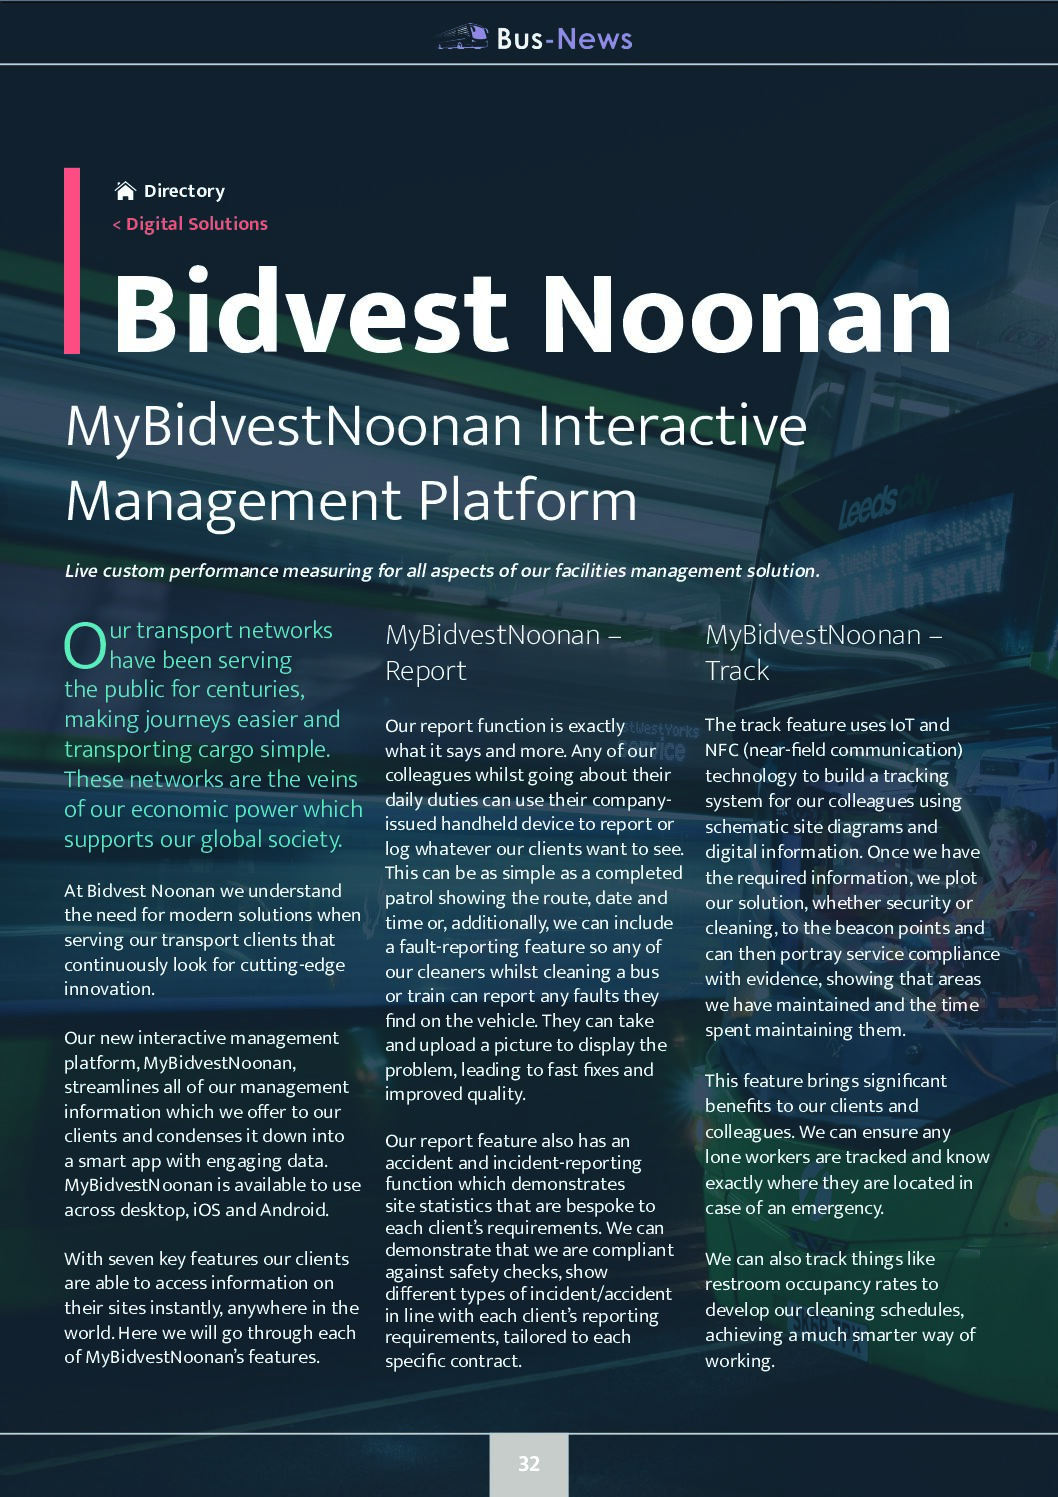 MyBidvestNoonan Interactive Management Platform